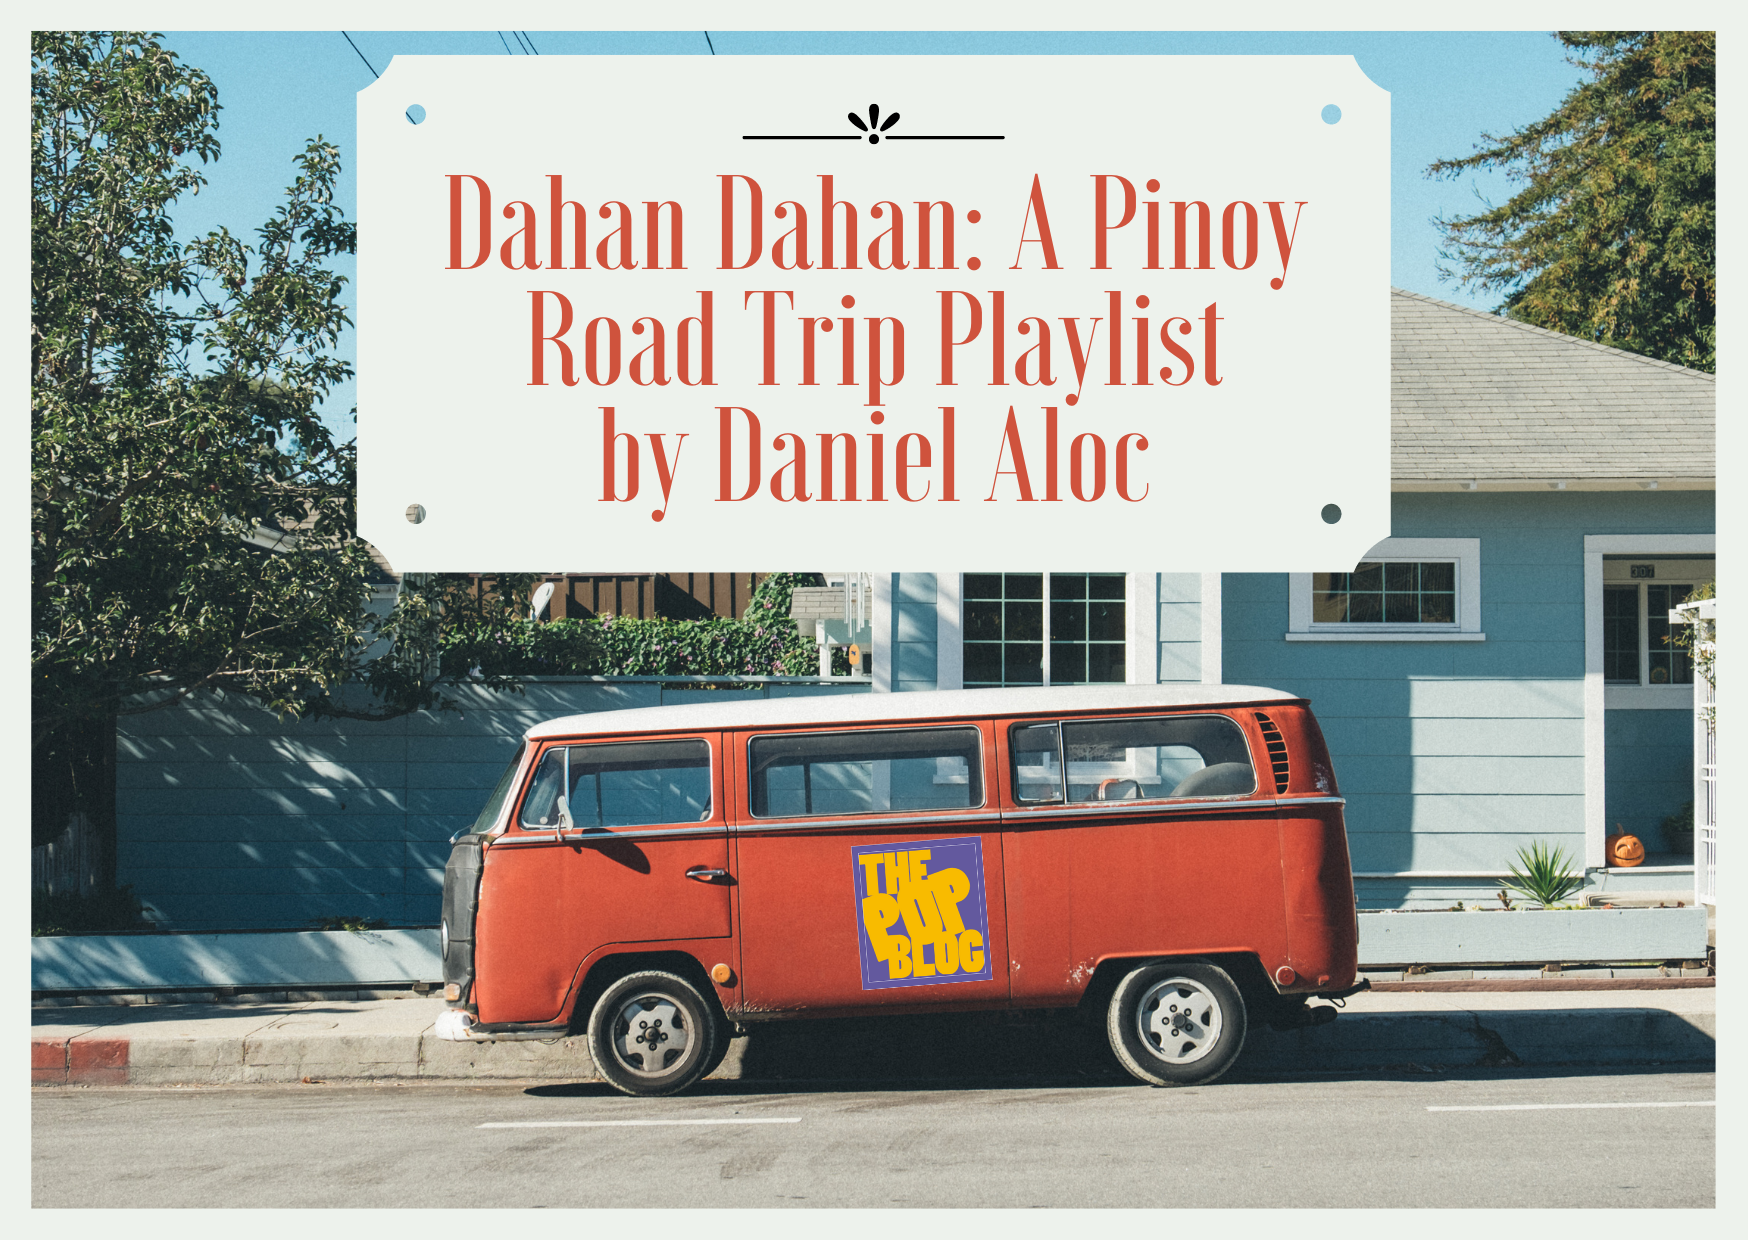 Dahan Dahan: A Pinoy Road Trip Playlist